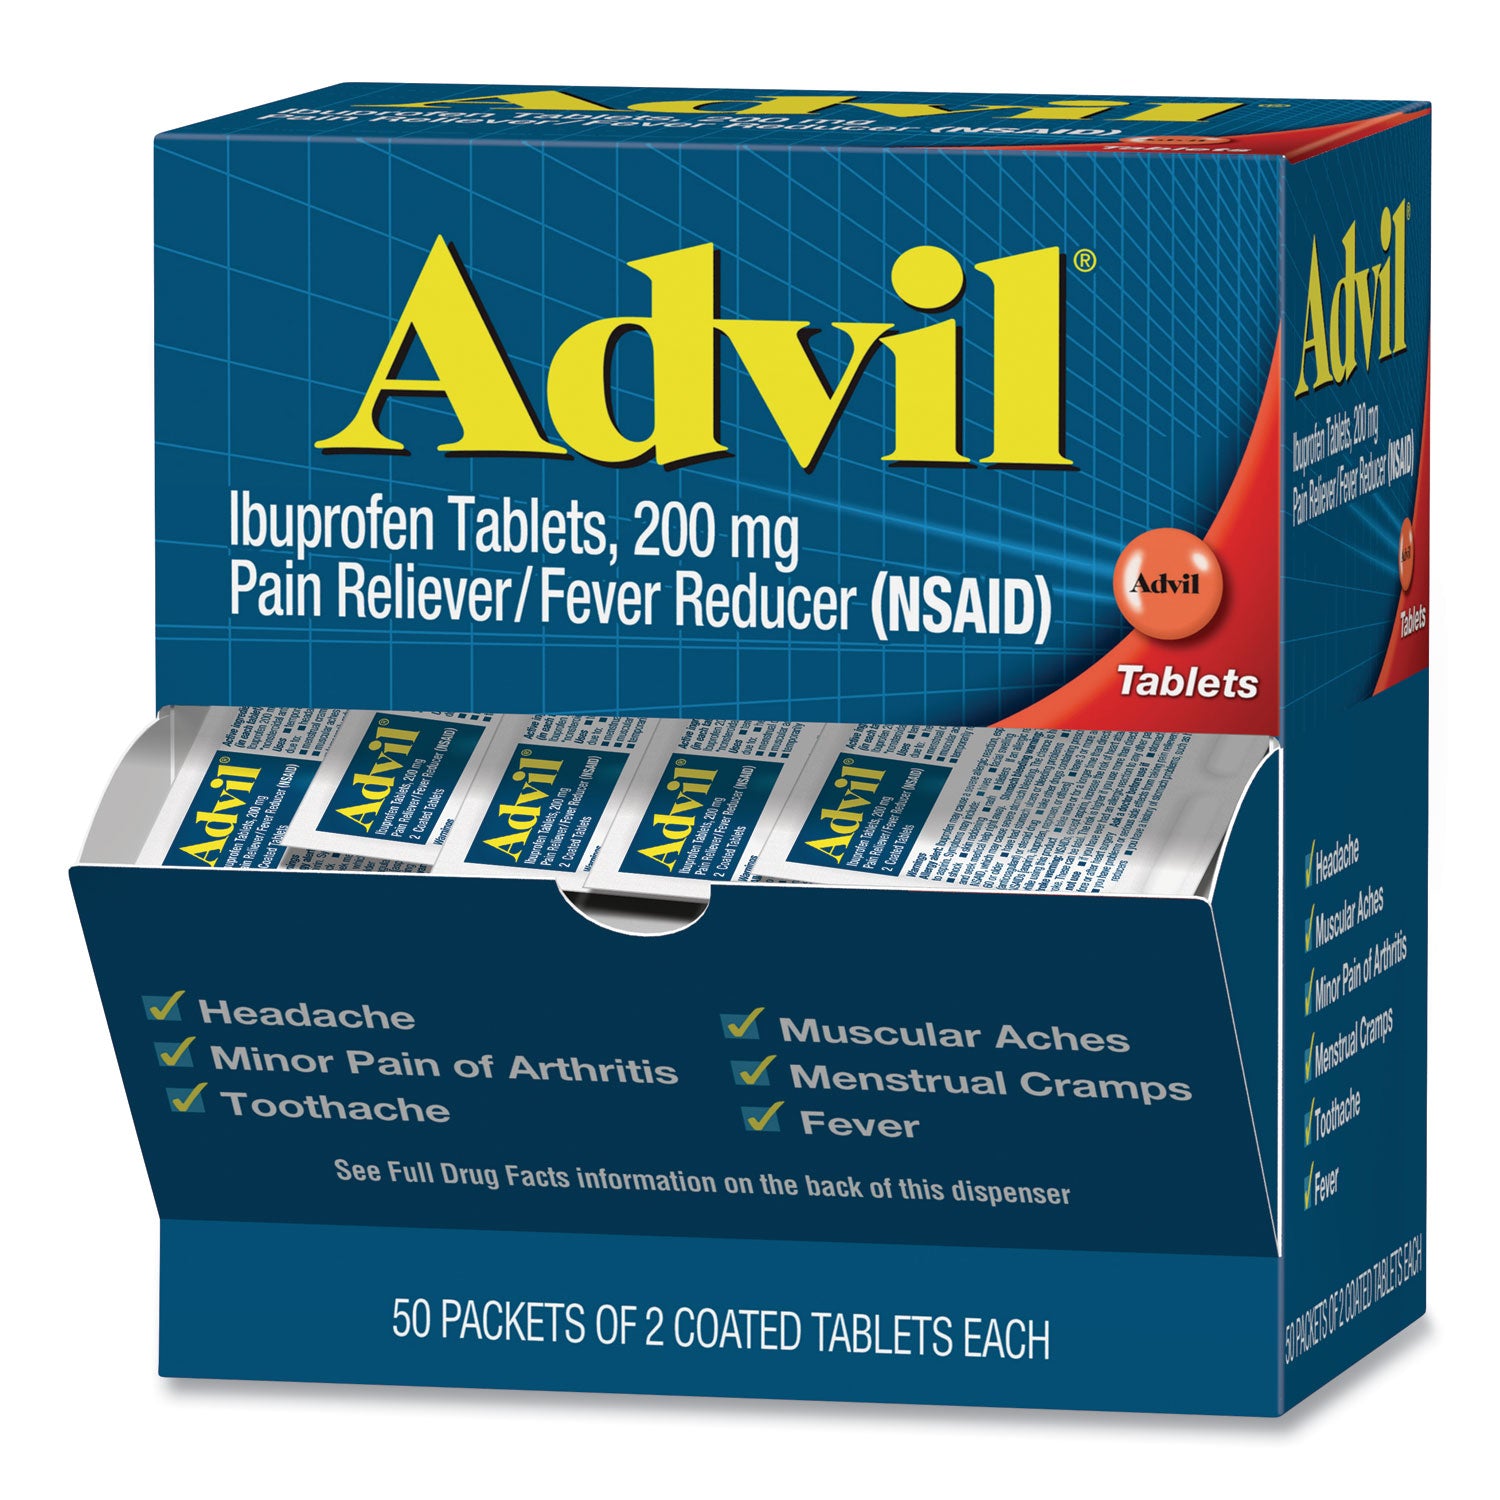 ibuprofen-tablets-two-pack-50-packs-box_pfybxavl50bx - 3